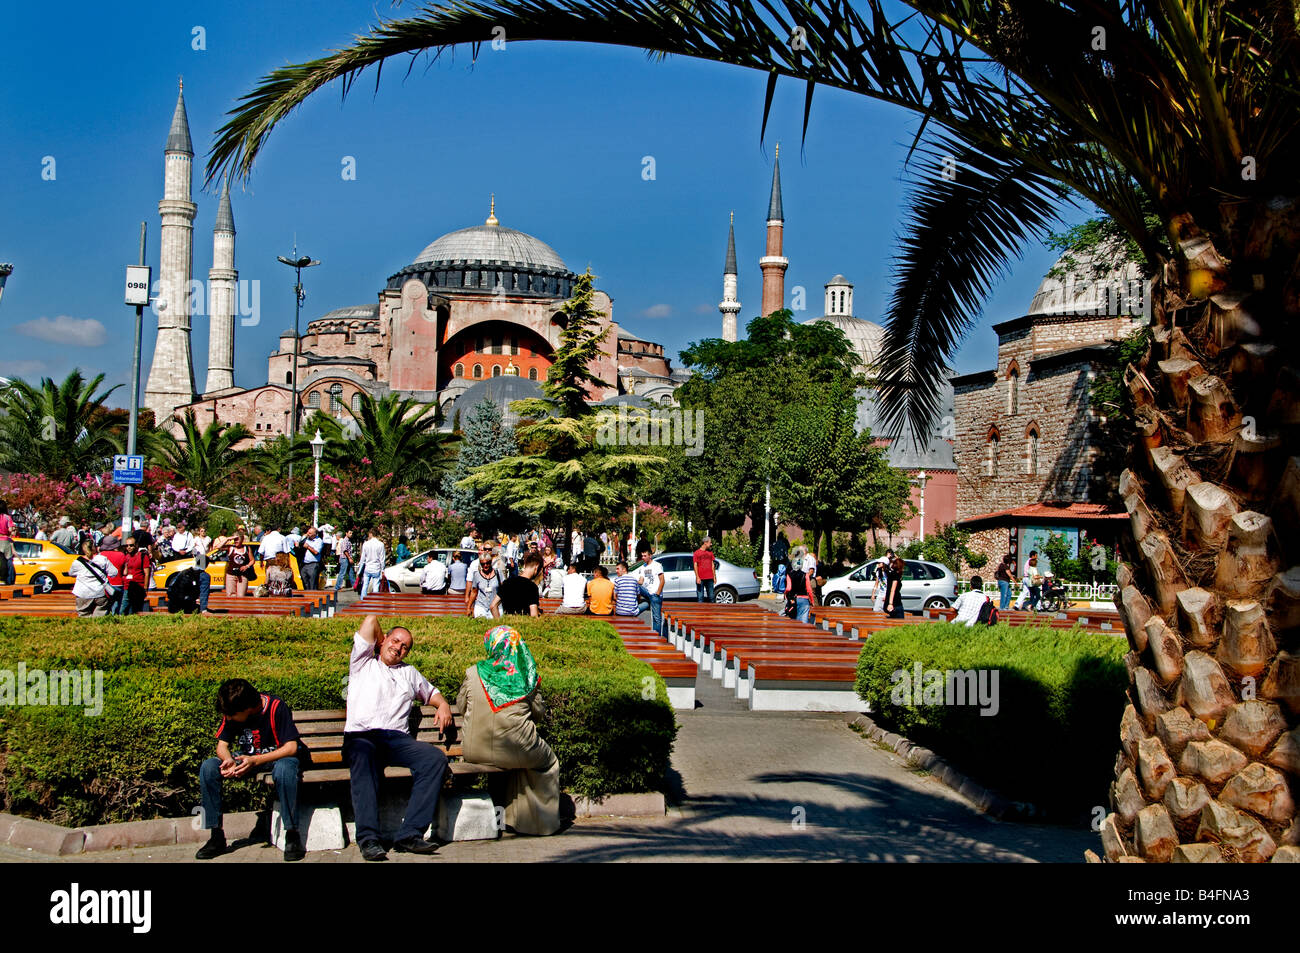 Aya sofya Haghia sophia mosque Istanbul Turkey Stock Photo